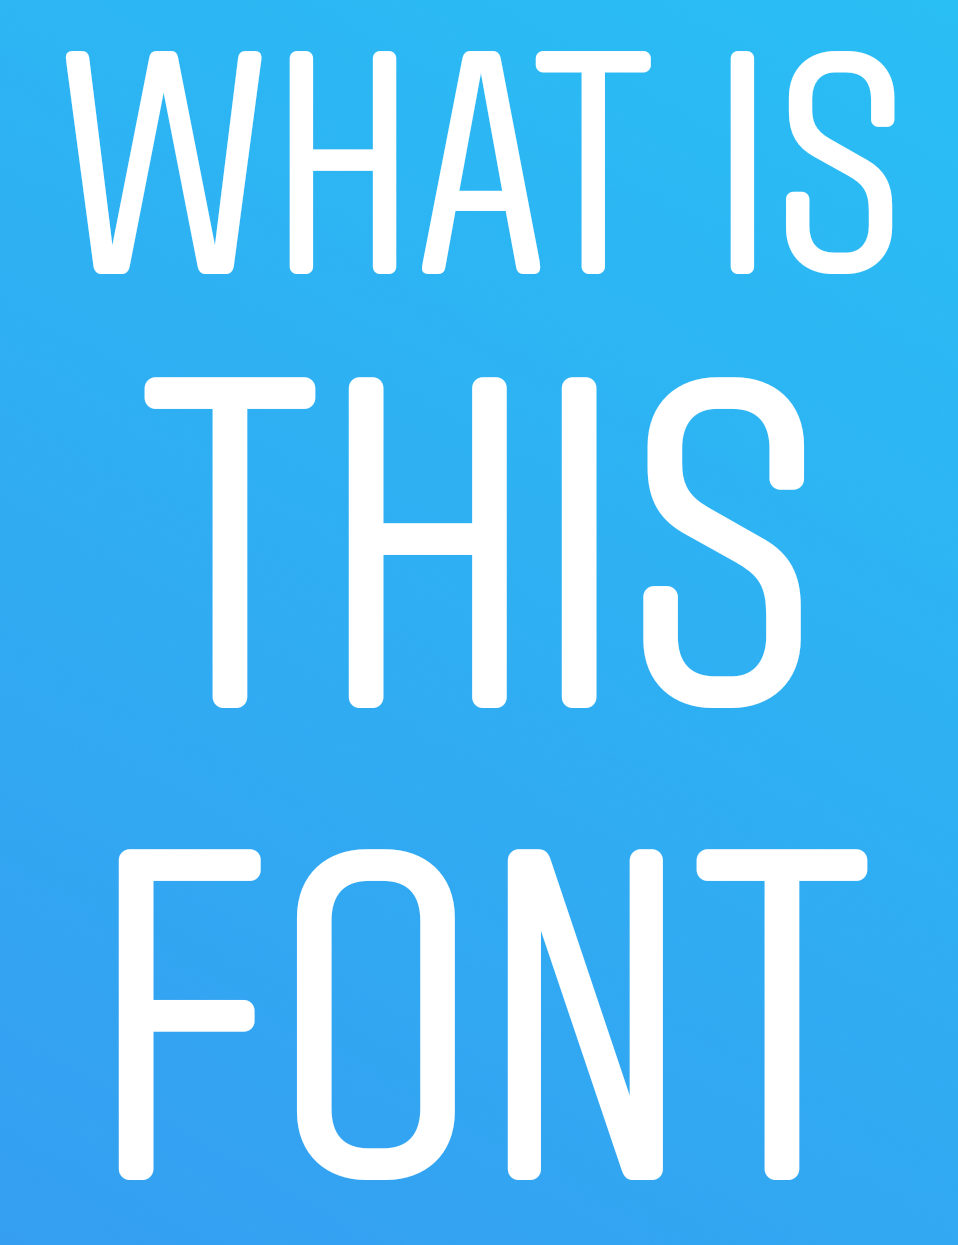 Mẫu mới nhất Modern font instagram Đang hot trend